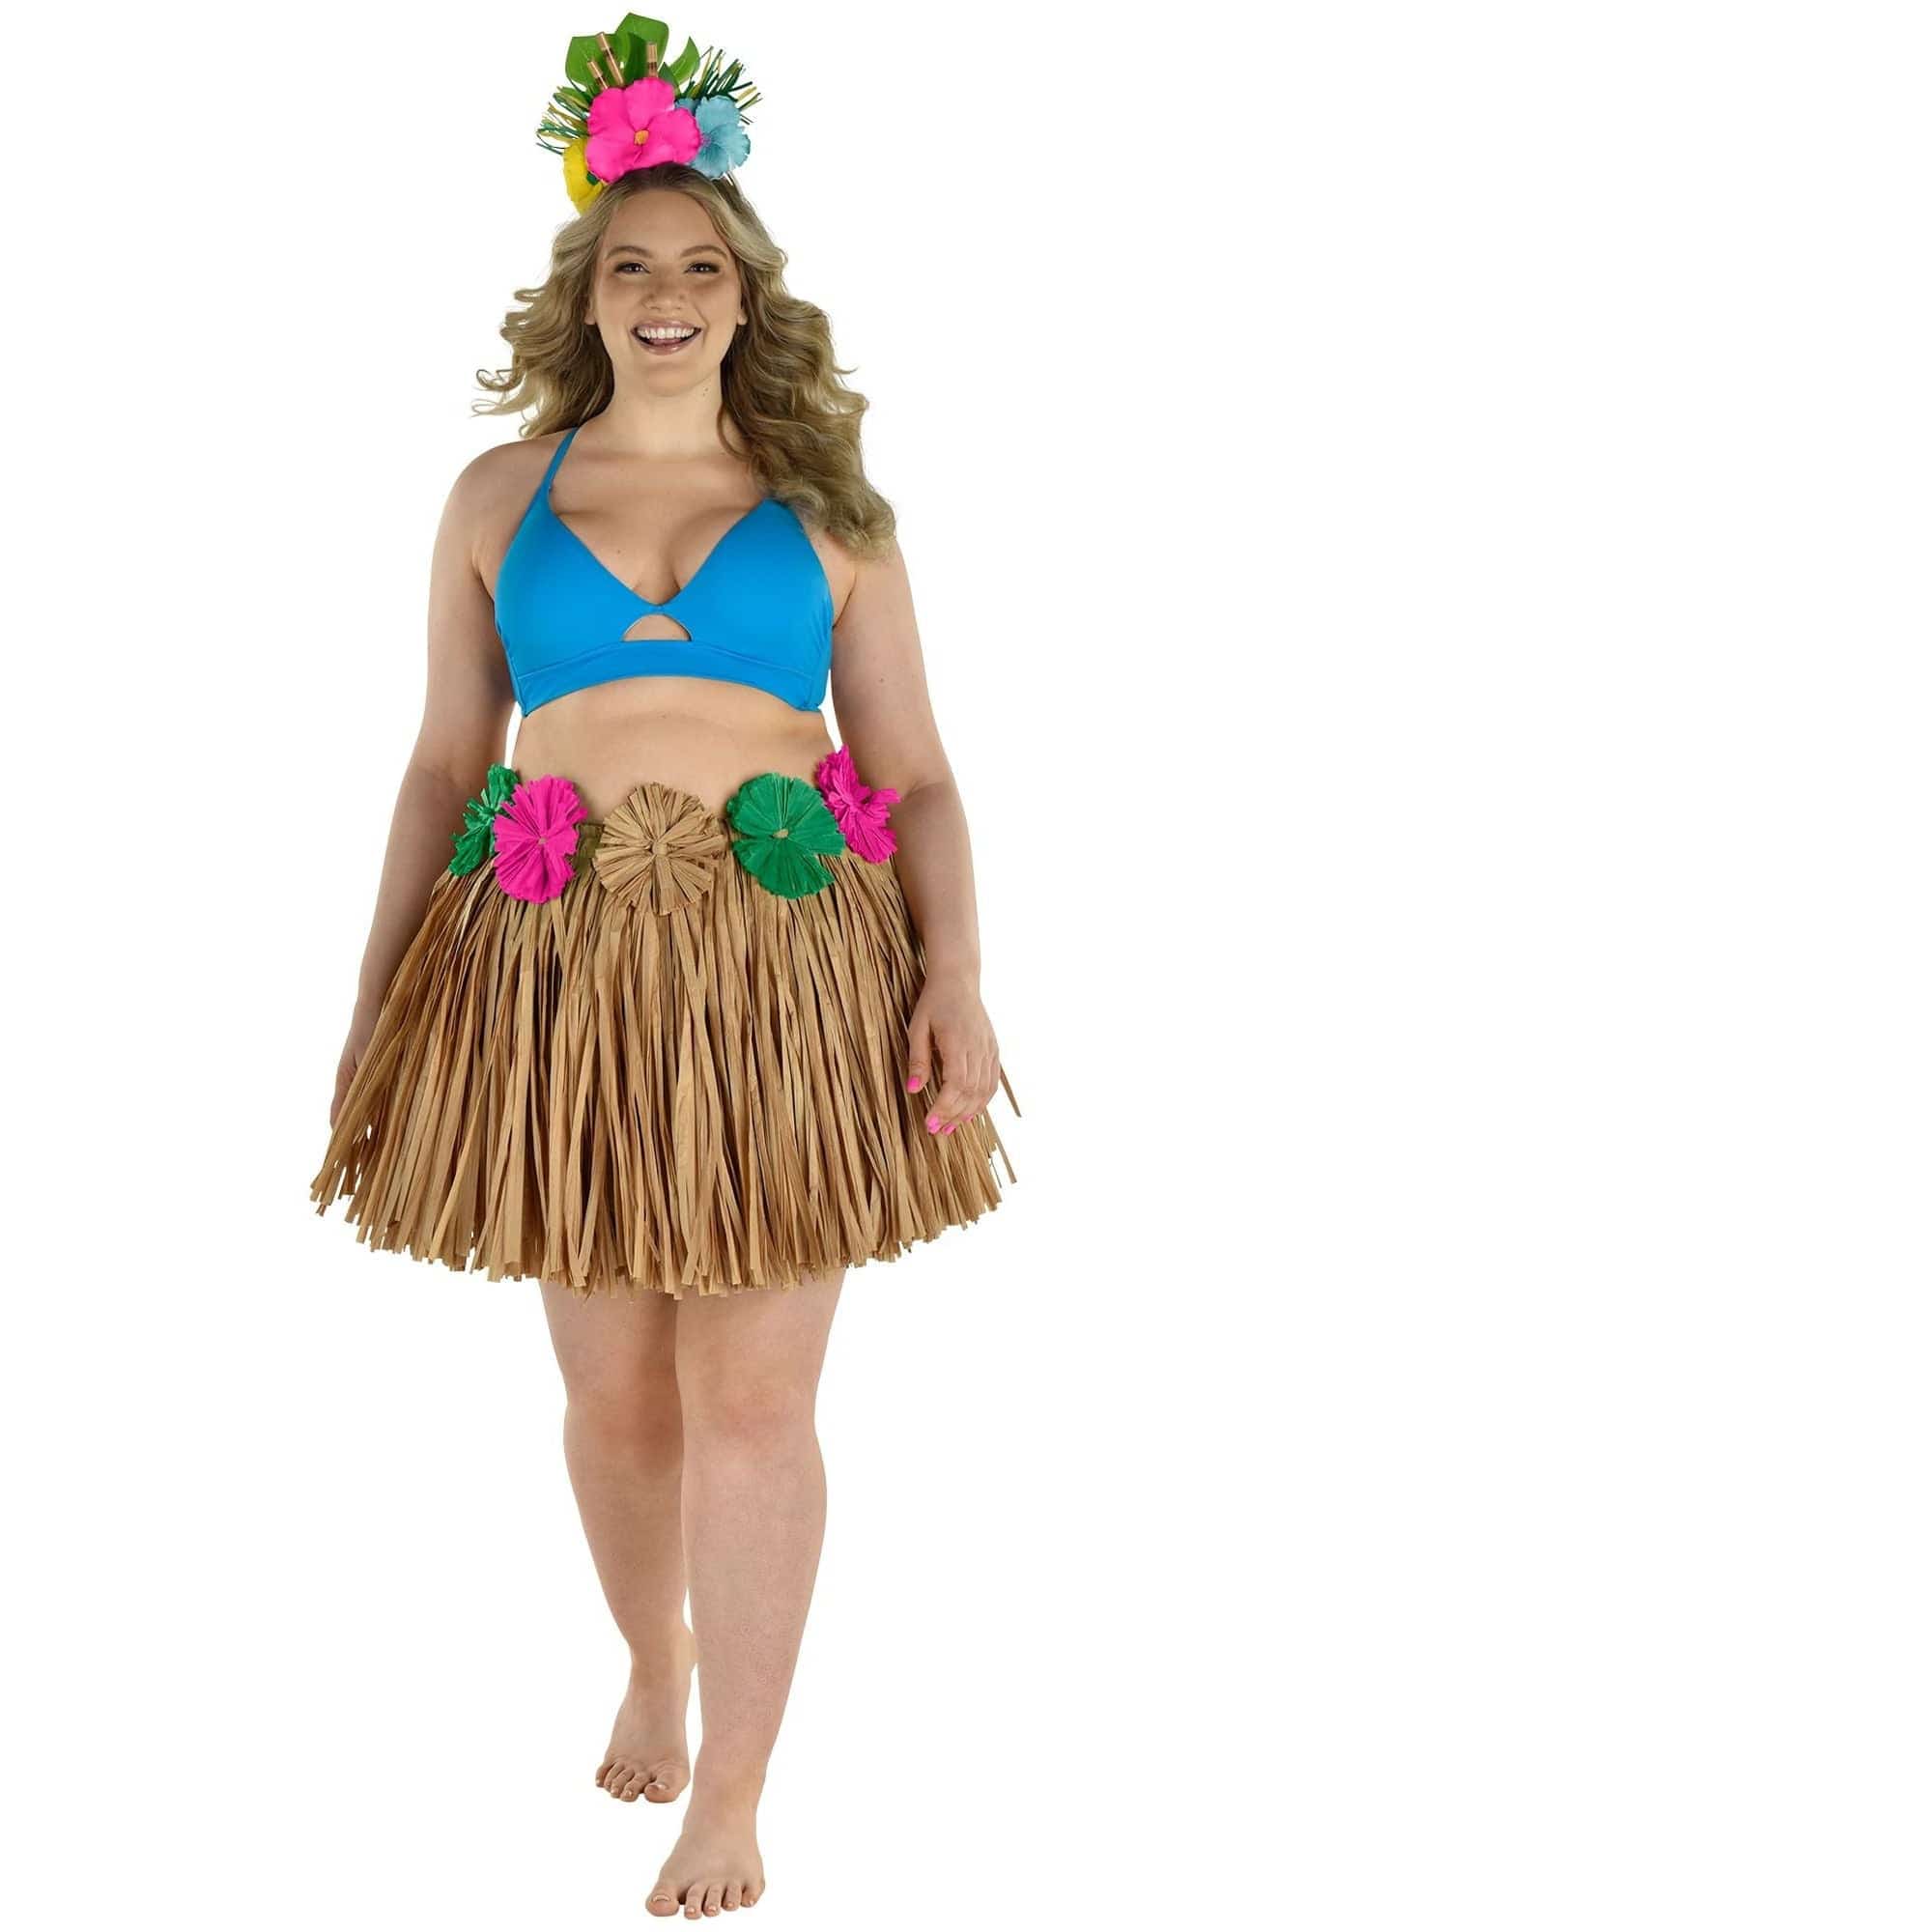 Ultimate Party Super Stores Tutu Grass Skirt w/Raffia Flowers - Adult Plus